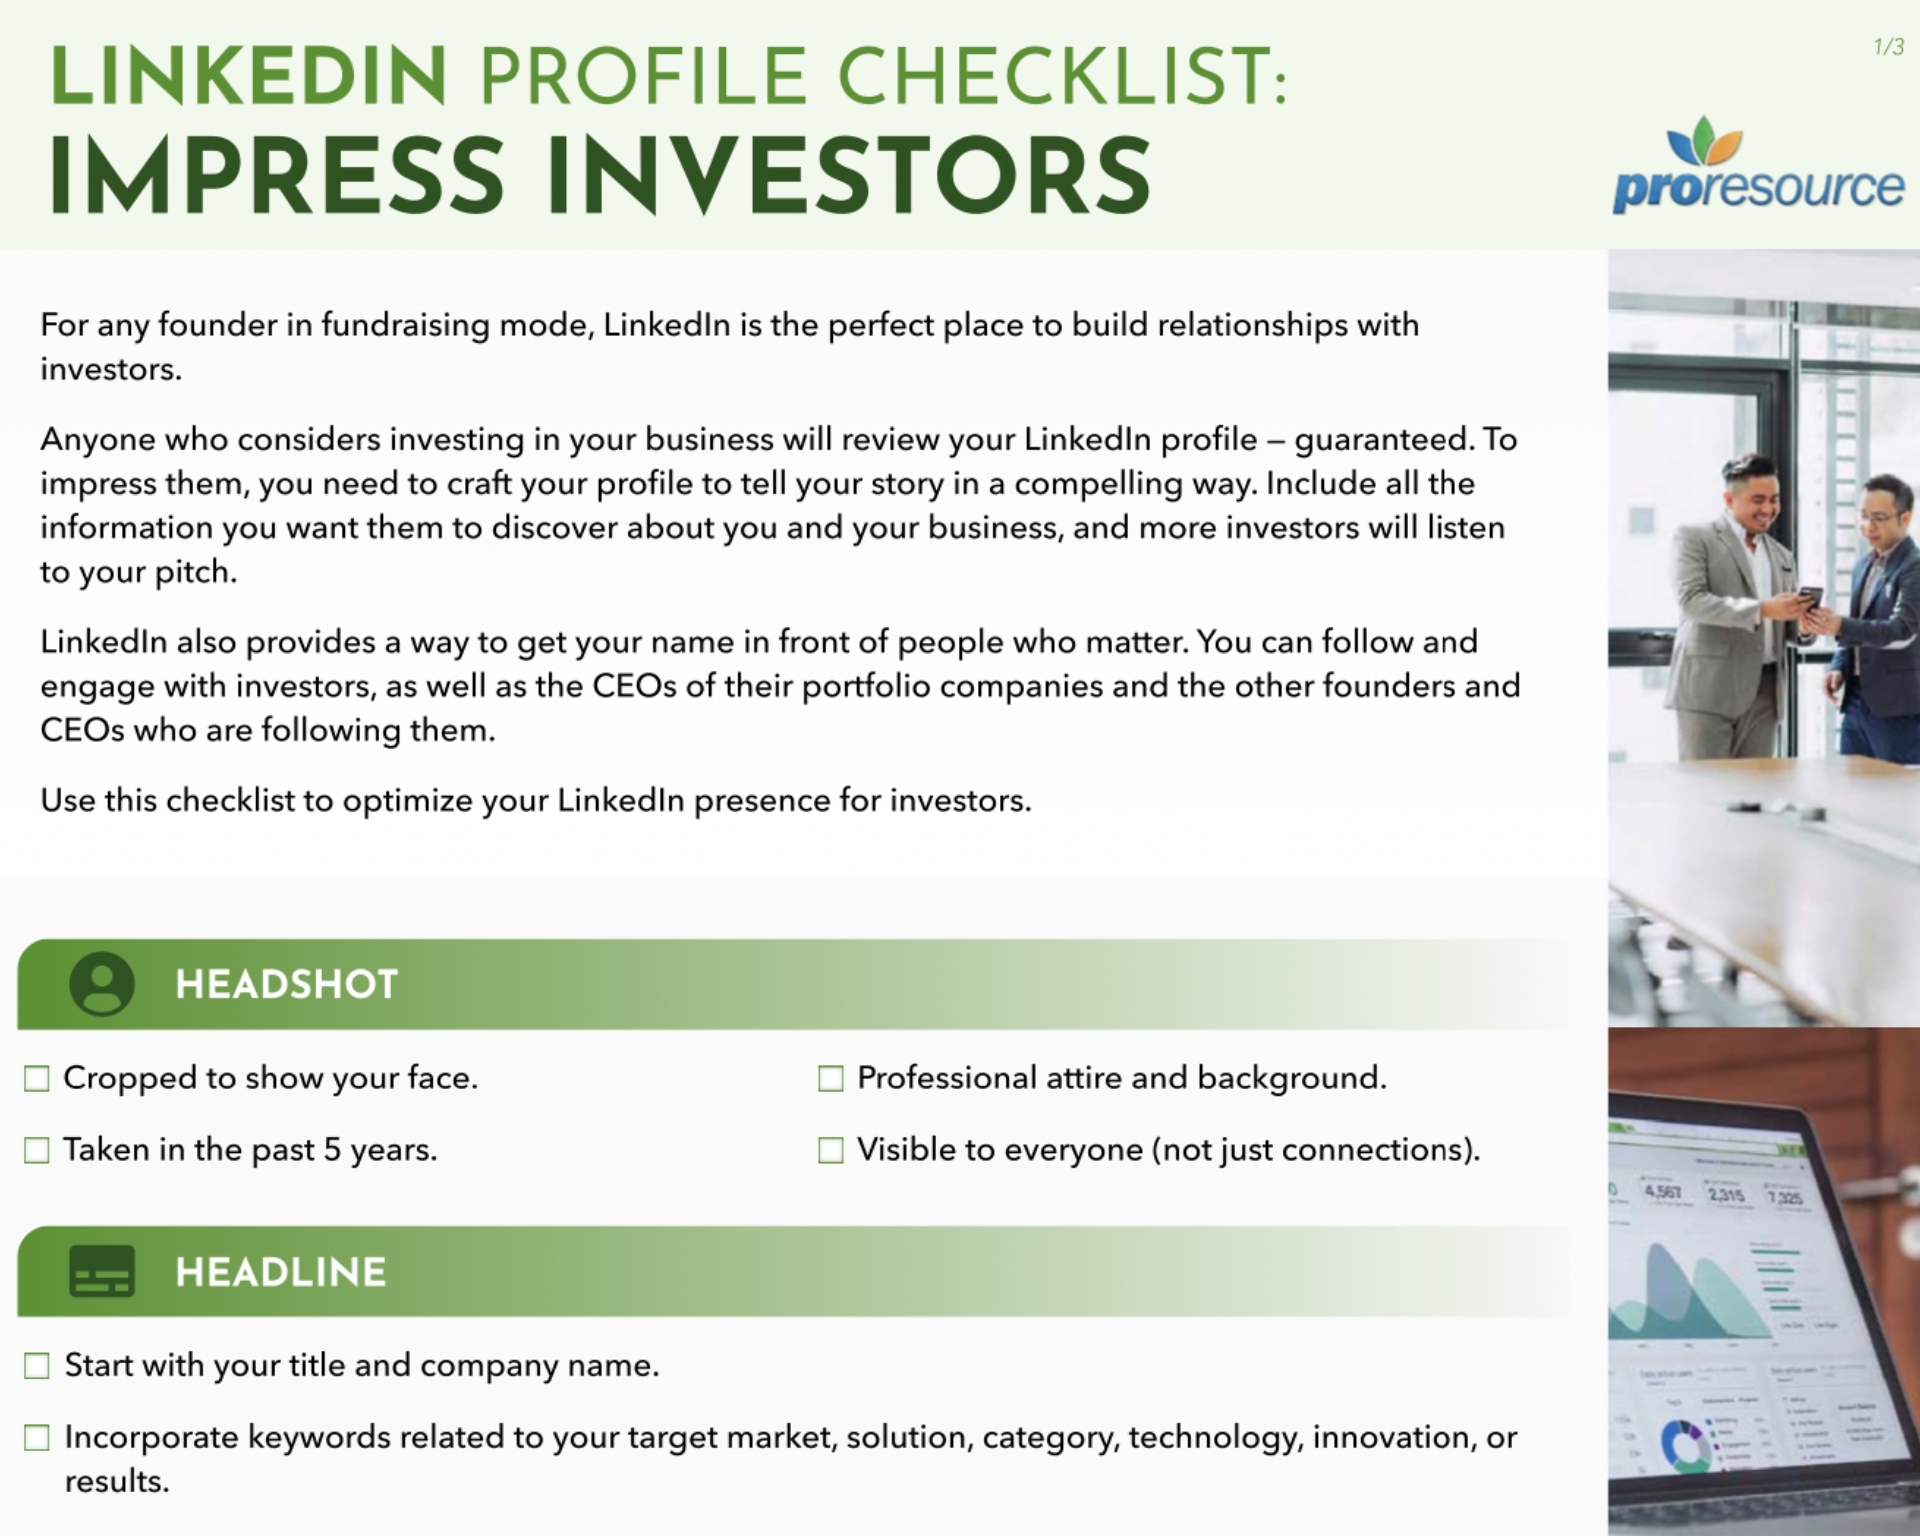 LinkedIn profile checklist for impressing investors